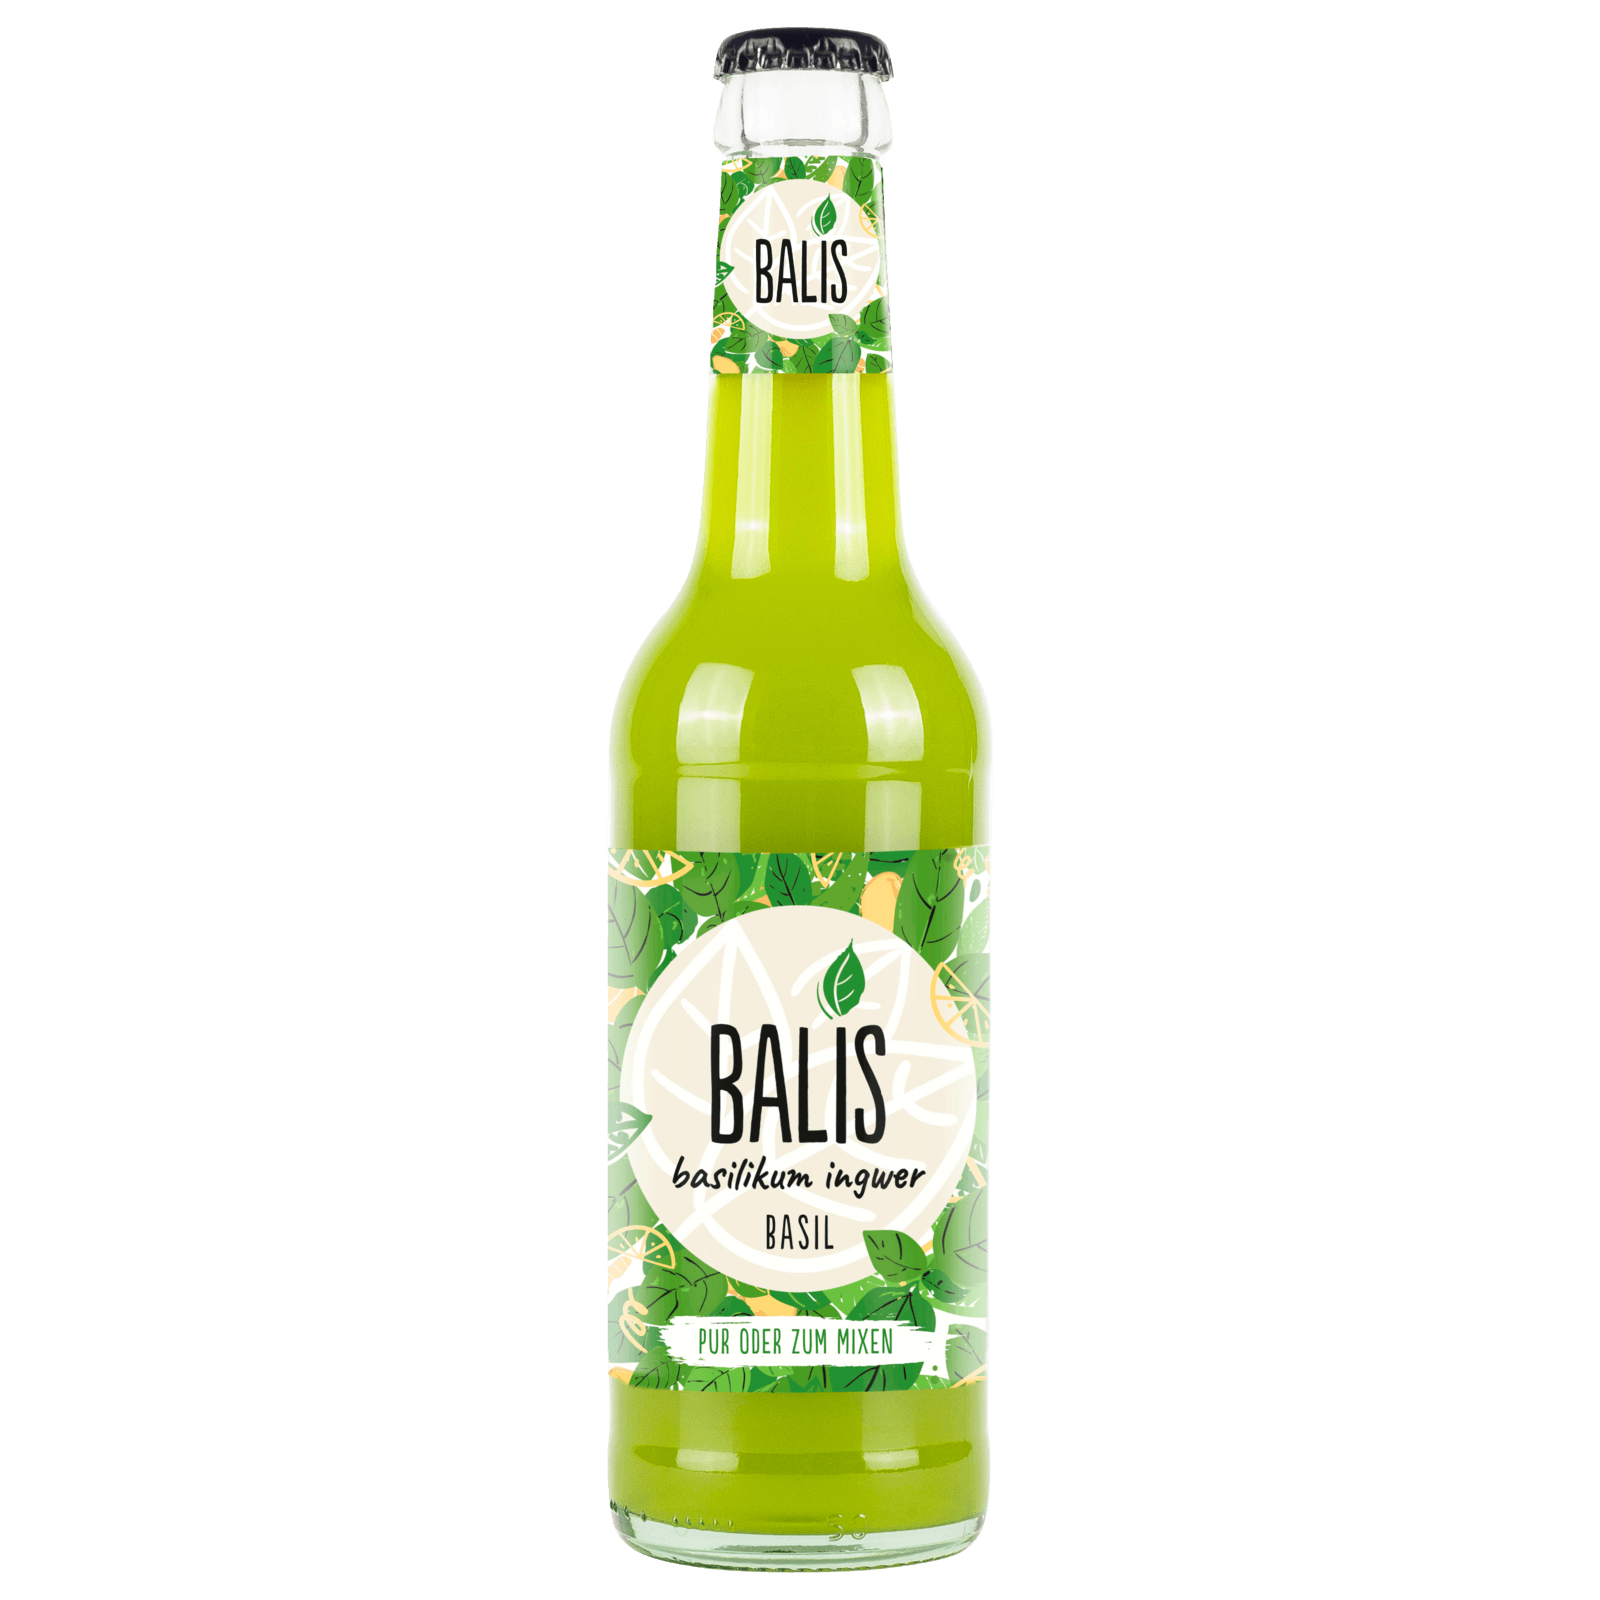 Balis Basil Basilikum Ingwer Drink 0,33l bei REWE online bestellen!